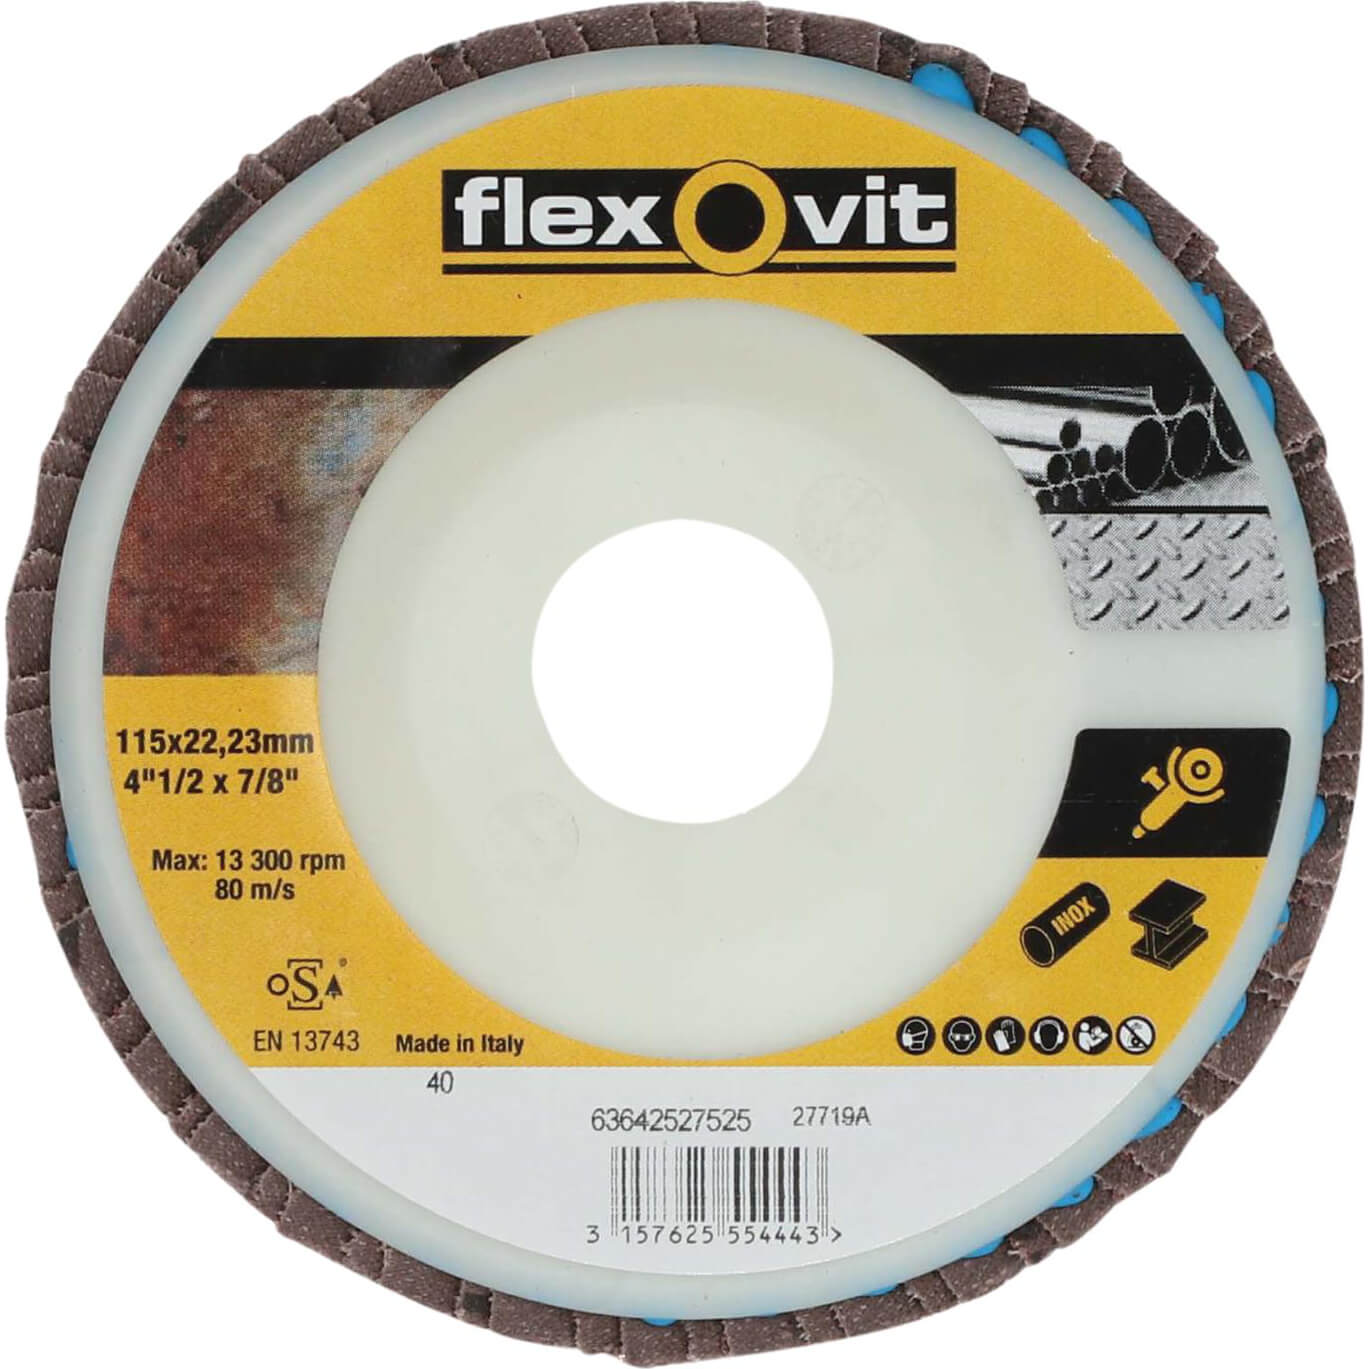 Photos - Cutting Disc Flexovit Abrasive Flap Disc 115mm 80g 27526 